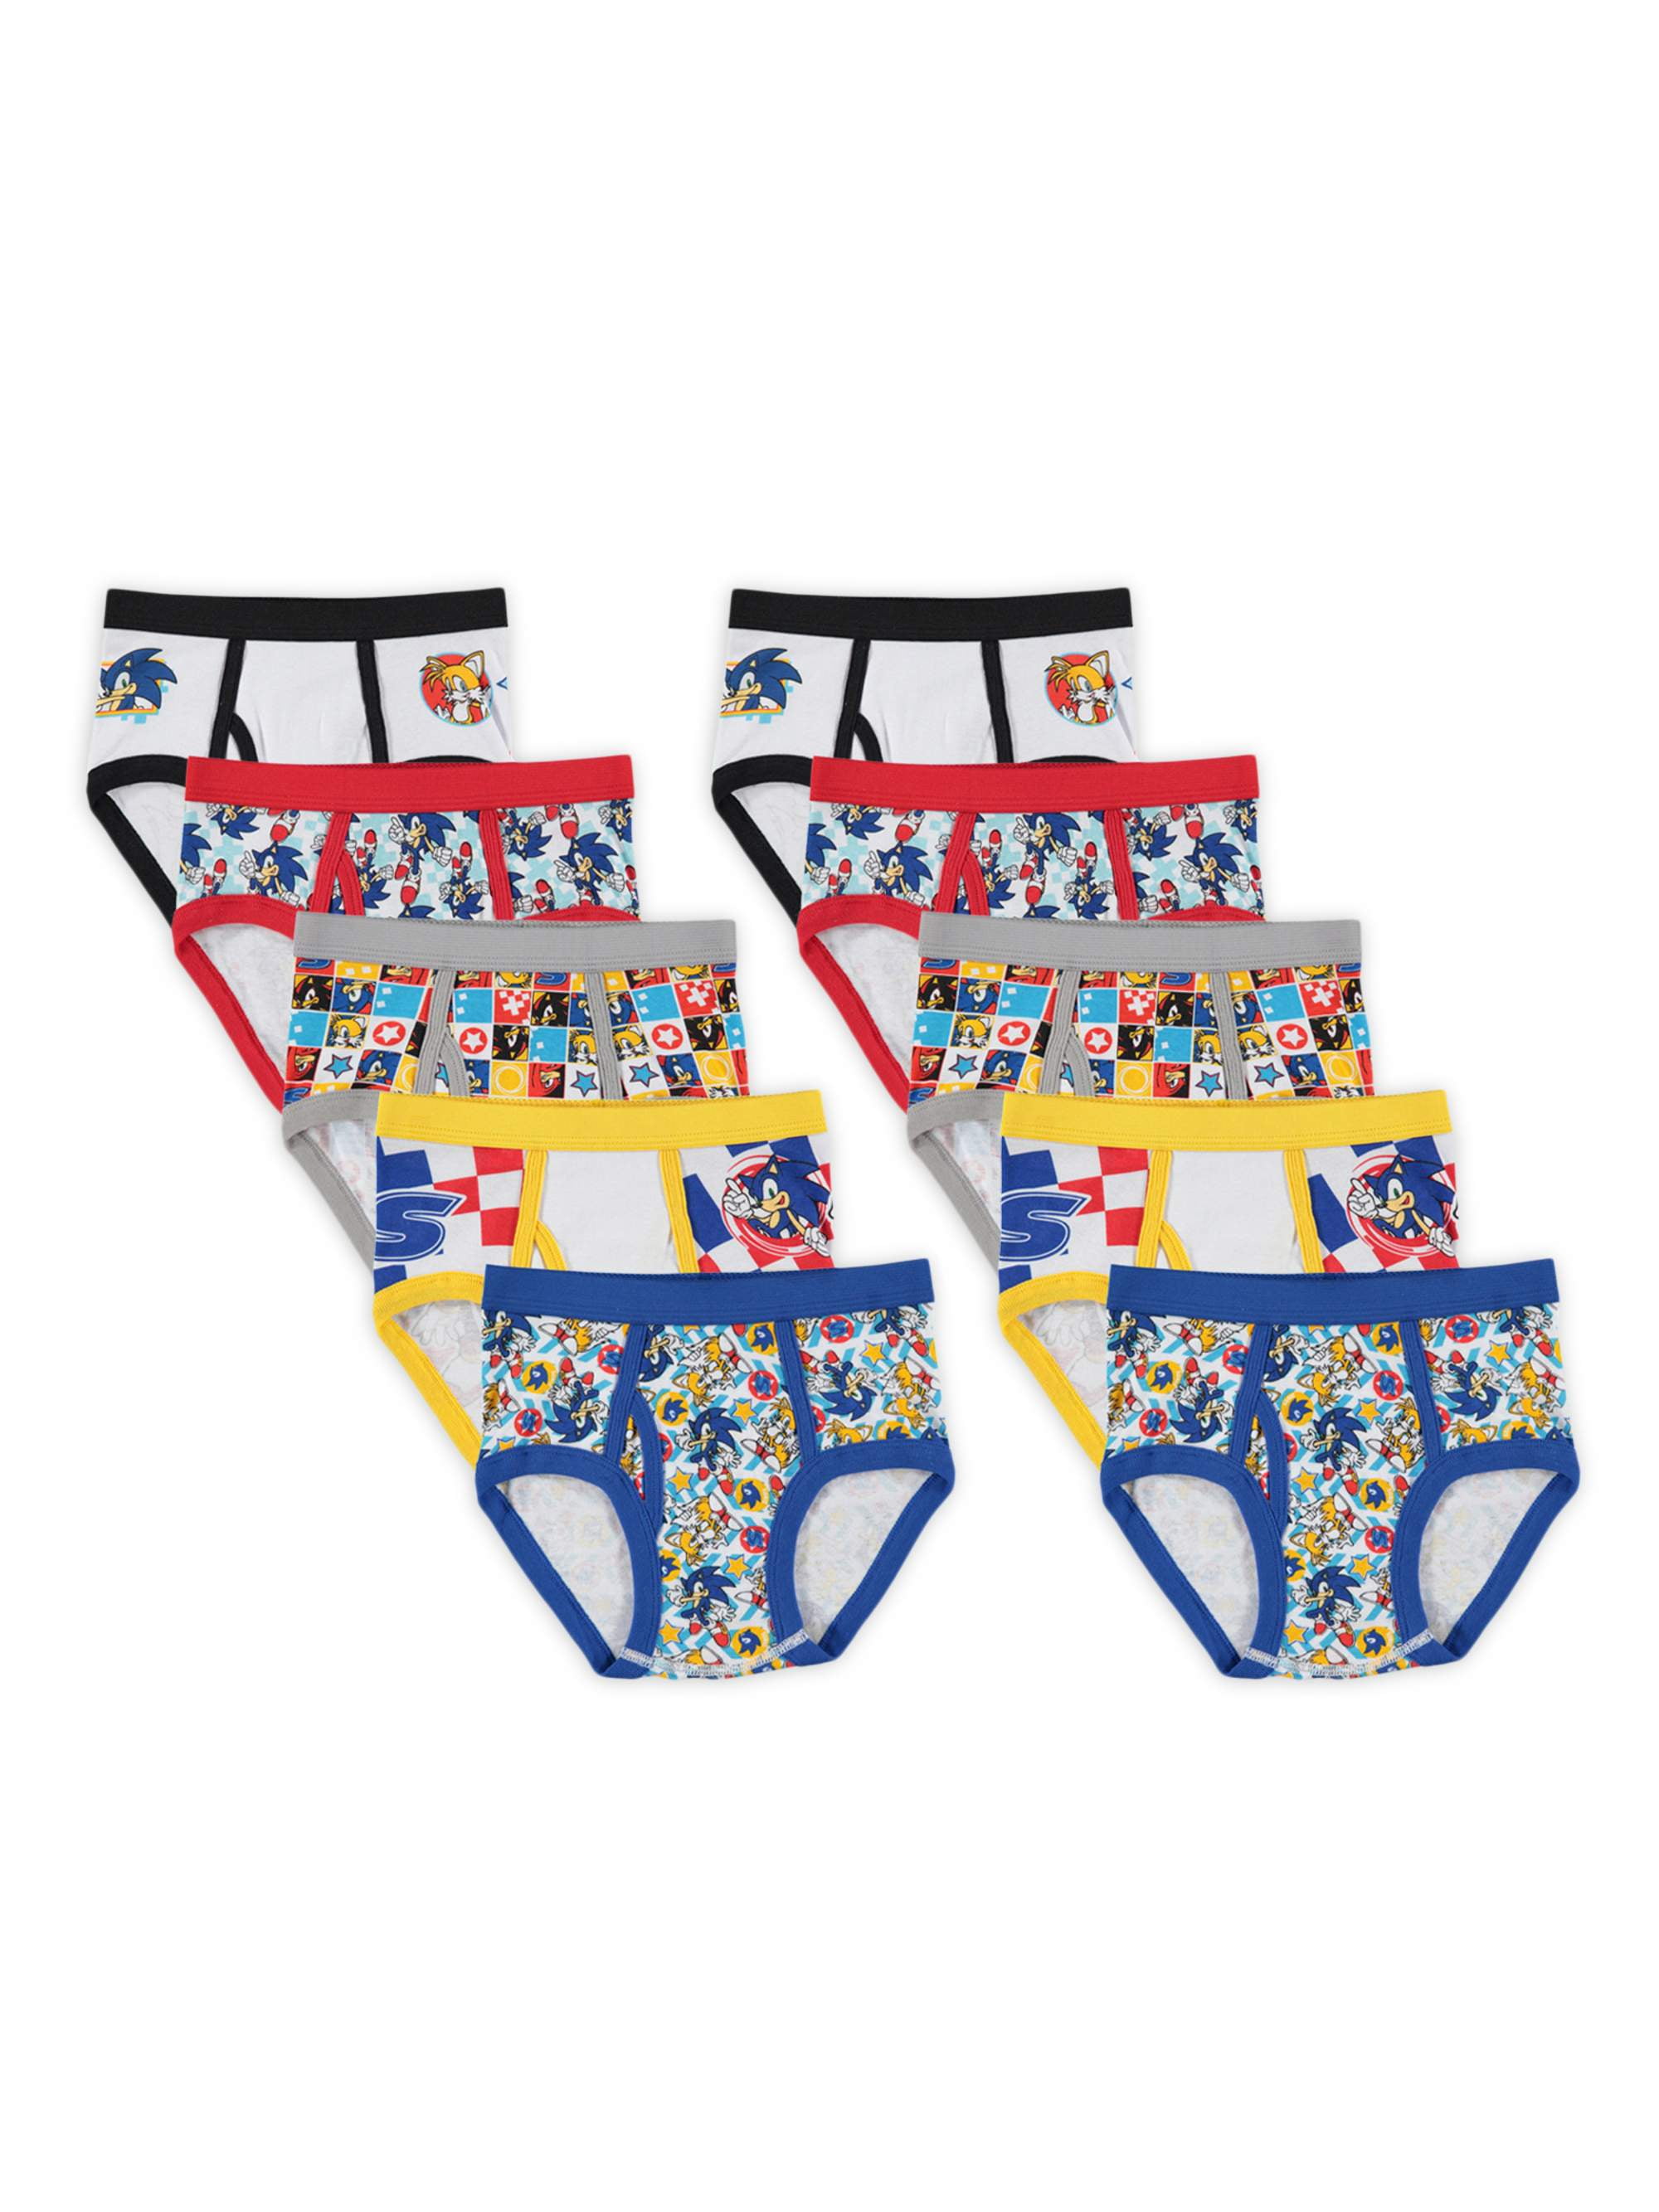 Sonic the Hedgehog Boys Underwear, 10 Pack Boxer Uganda